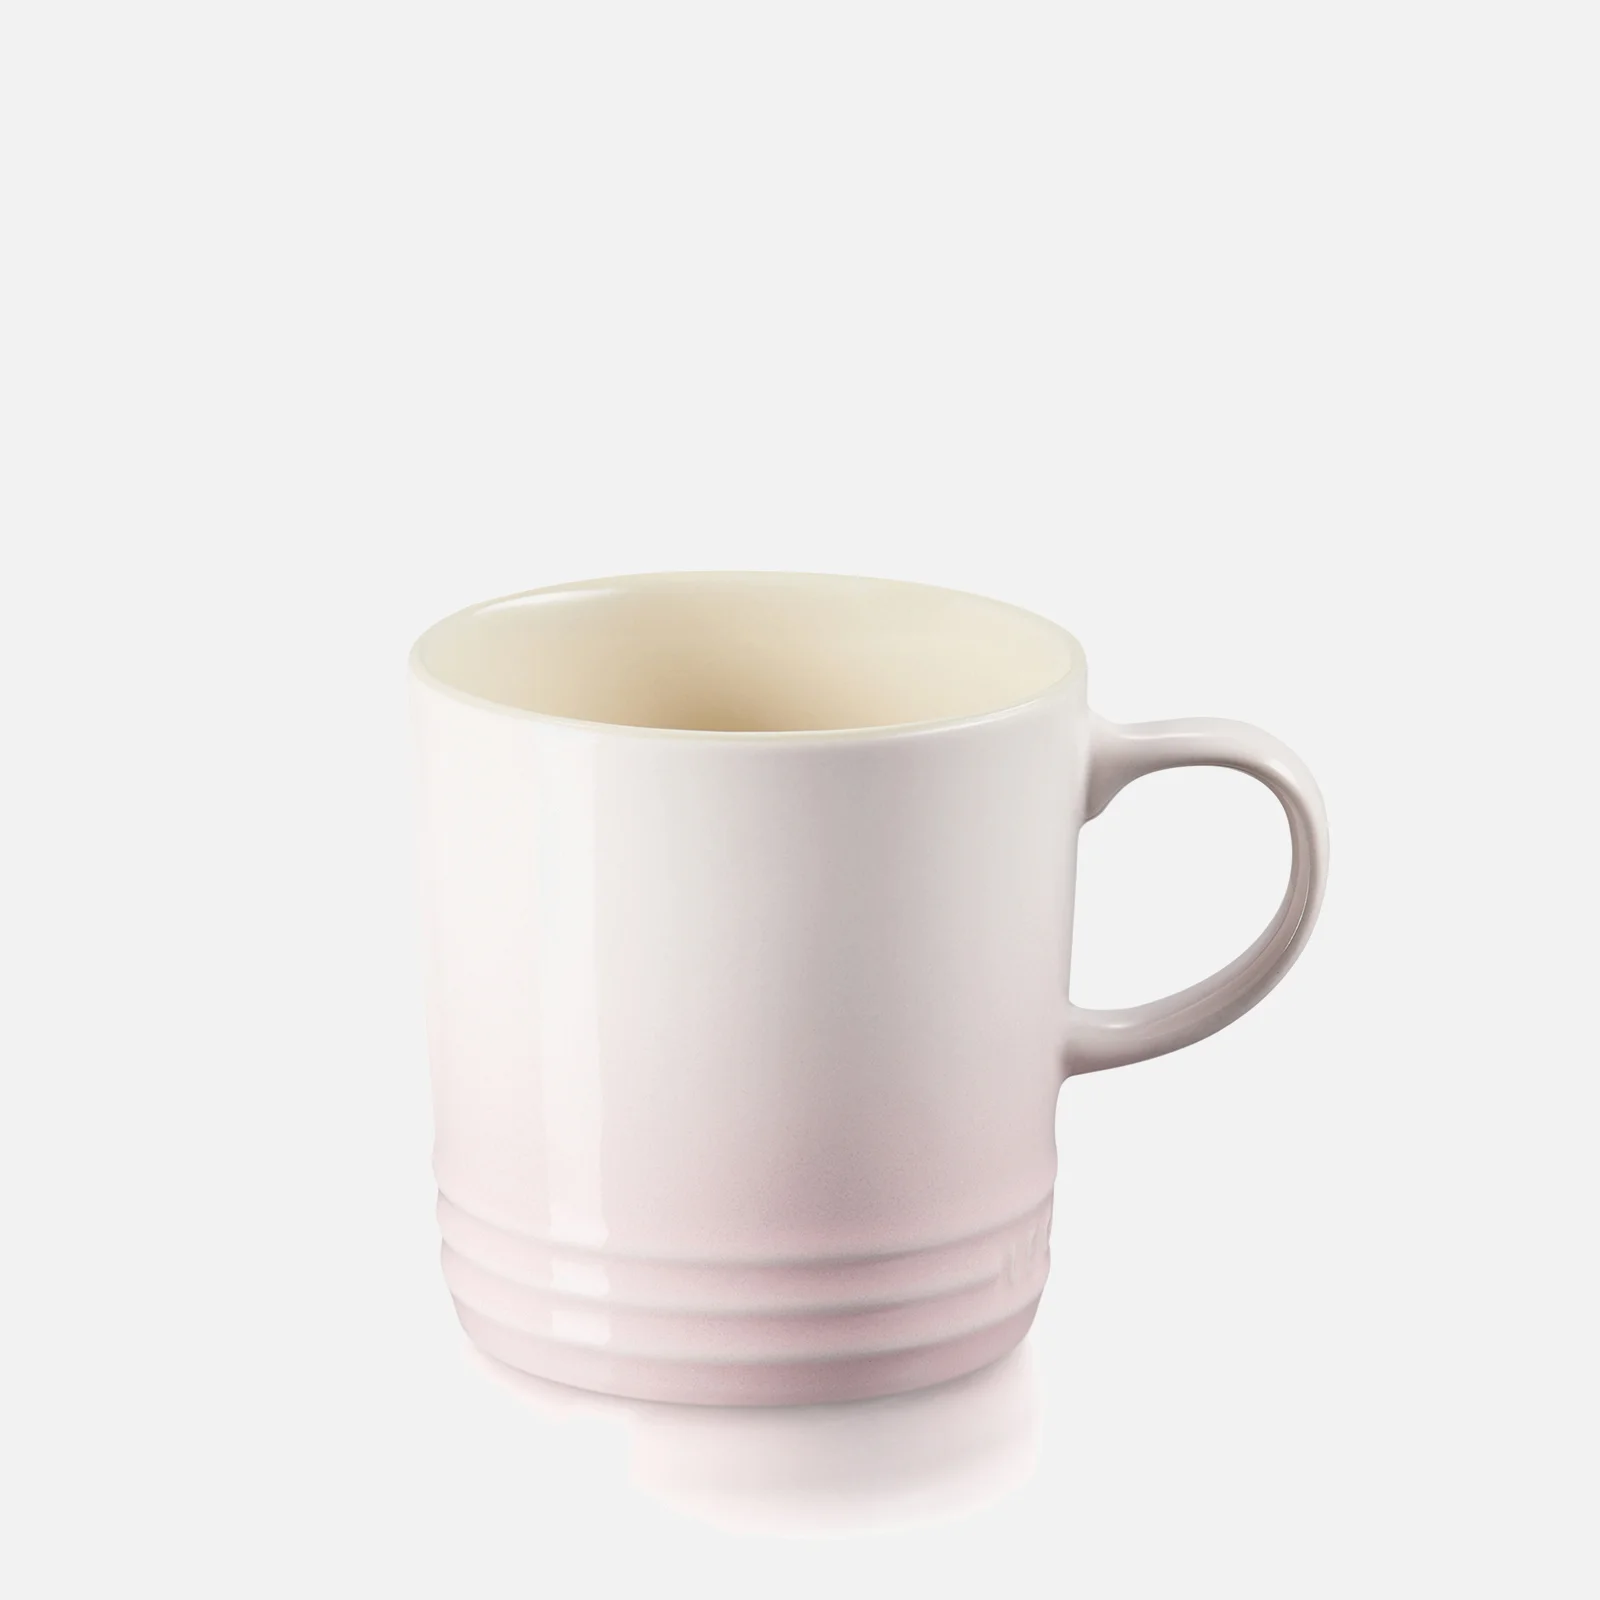 Le Creuset Stoneware Mug - 350ml - Shell Pink Image 1